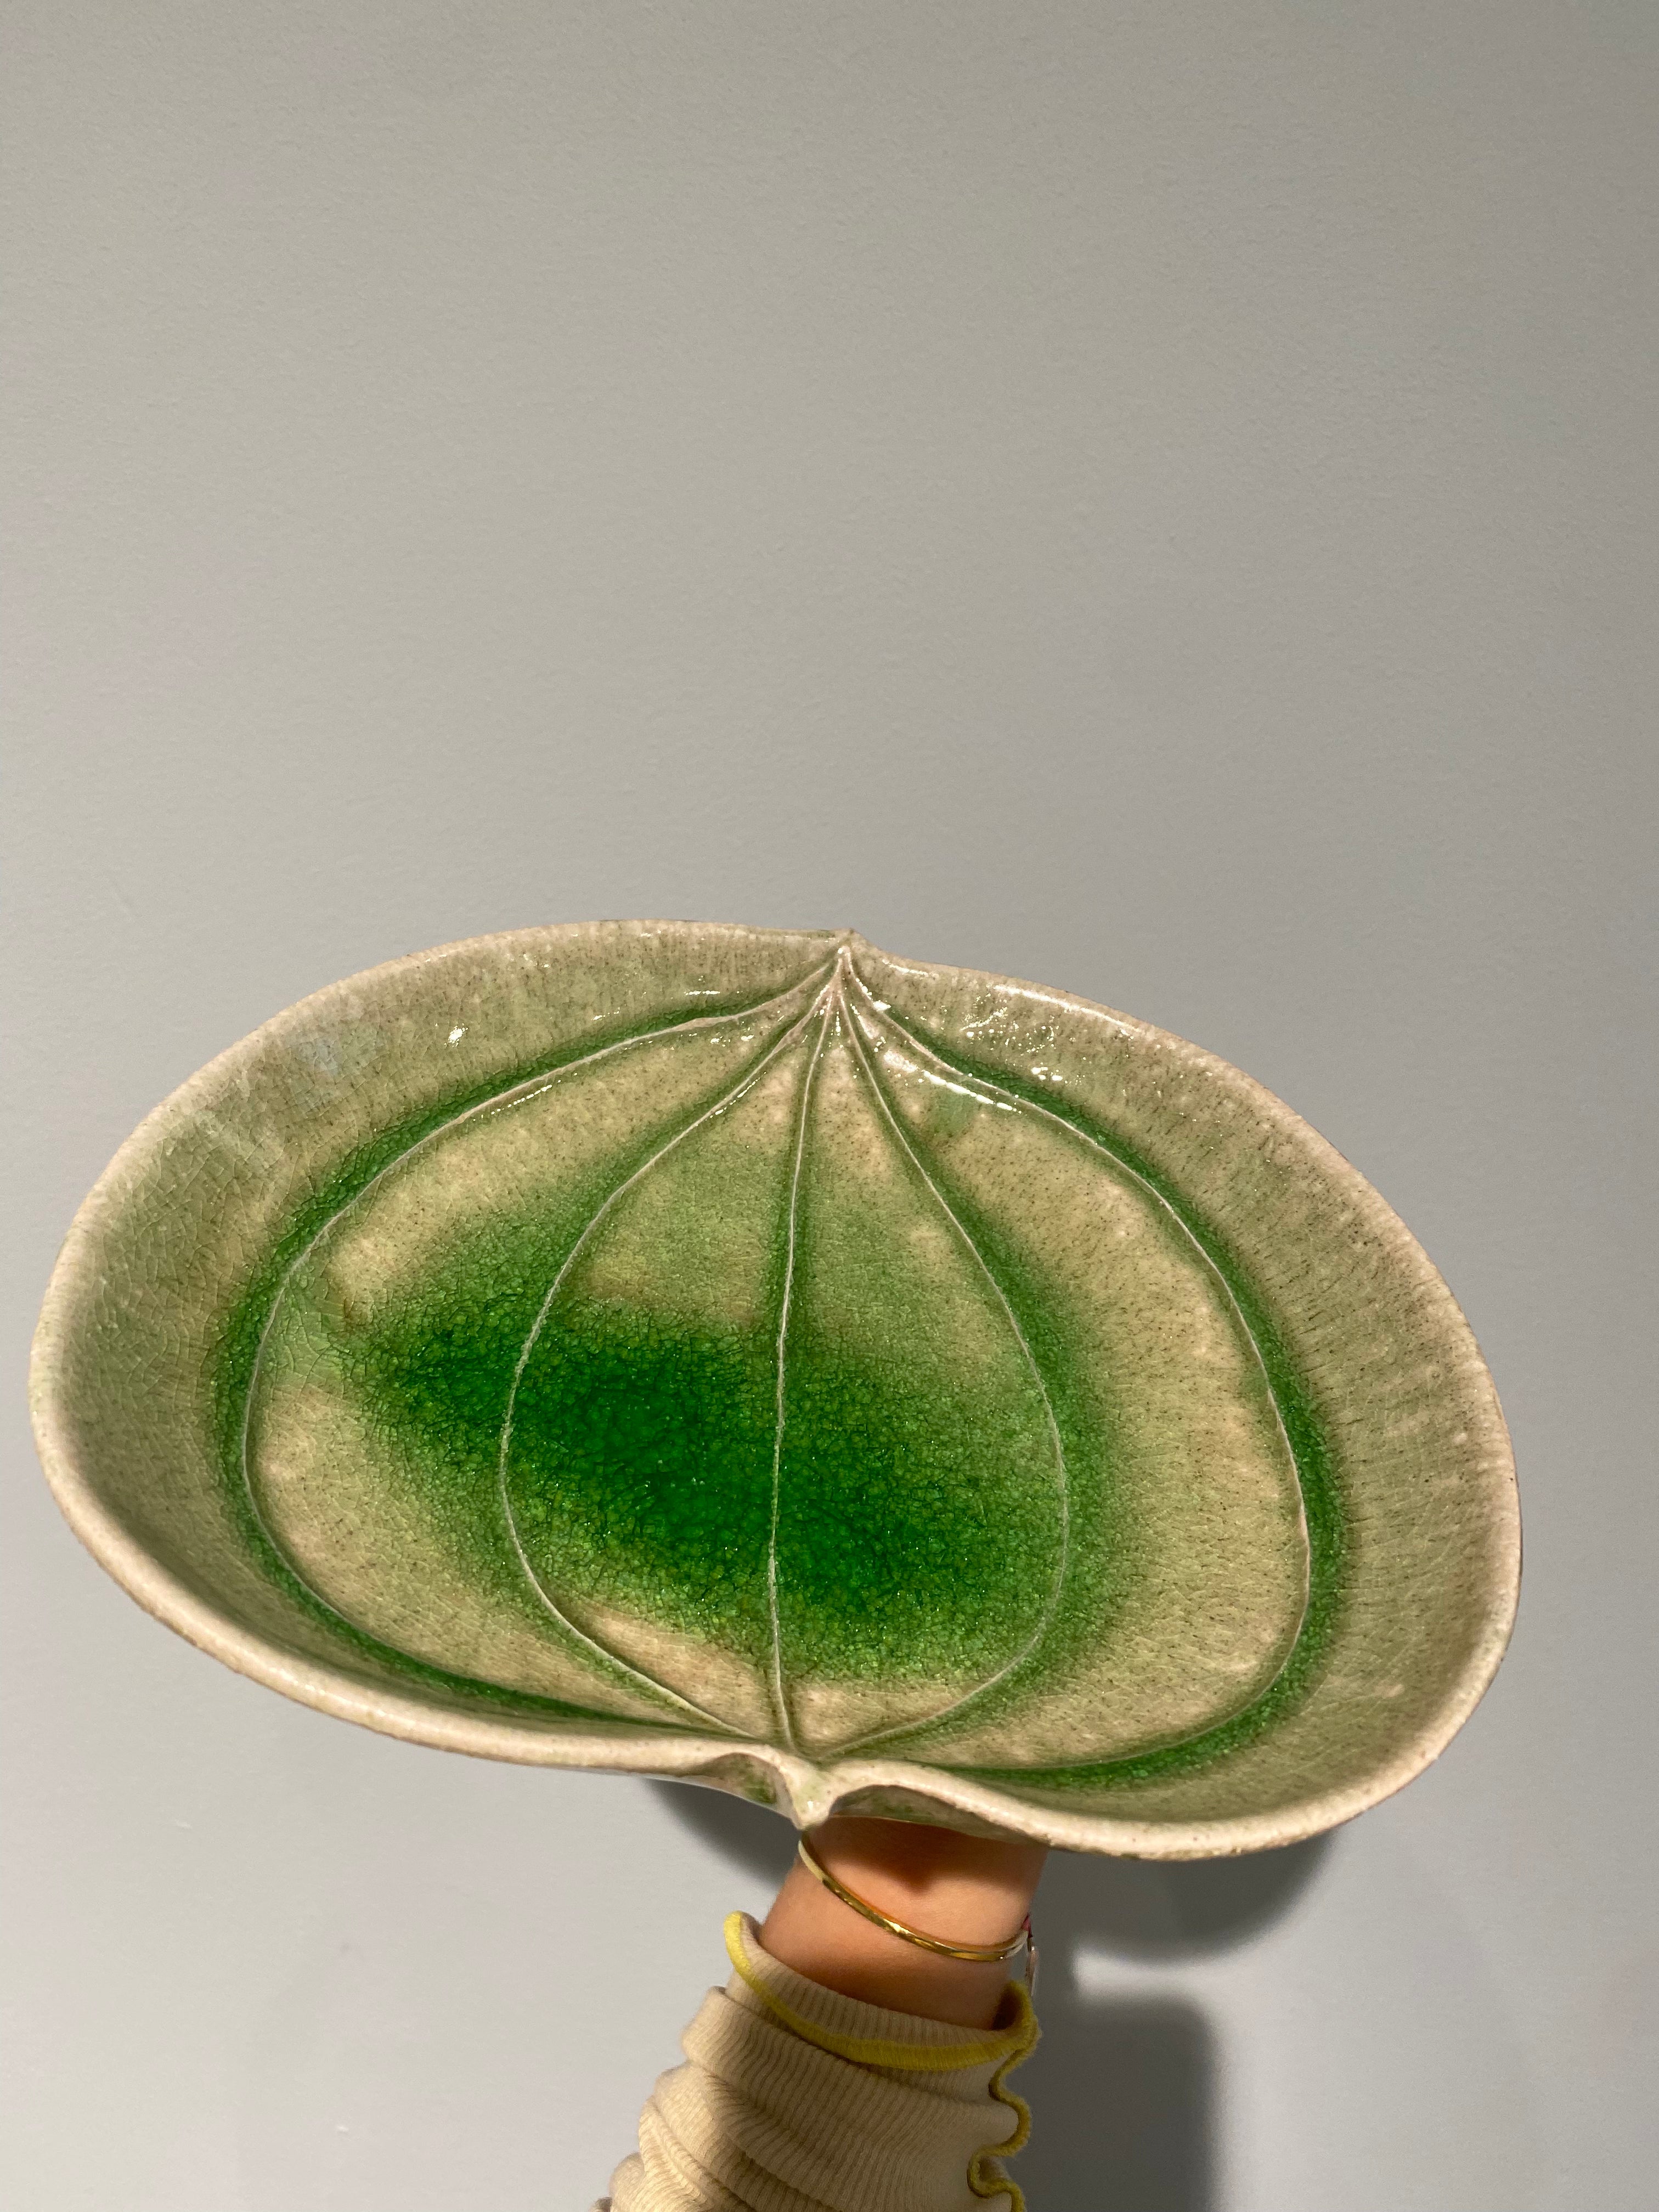 Leaf dish with green crackled glaze